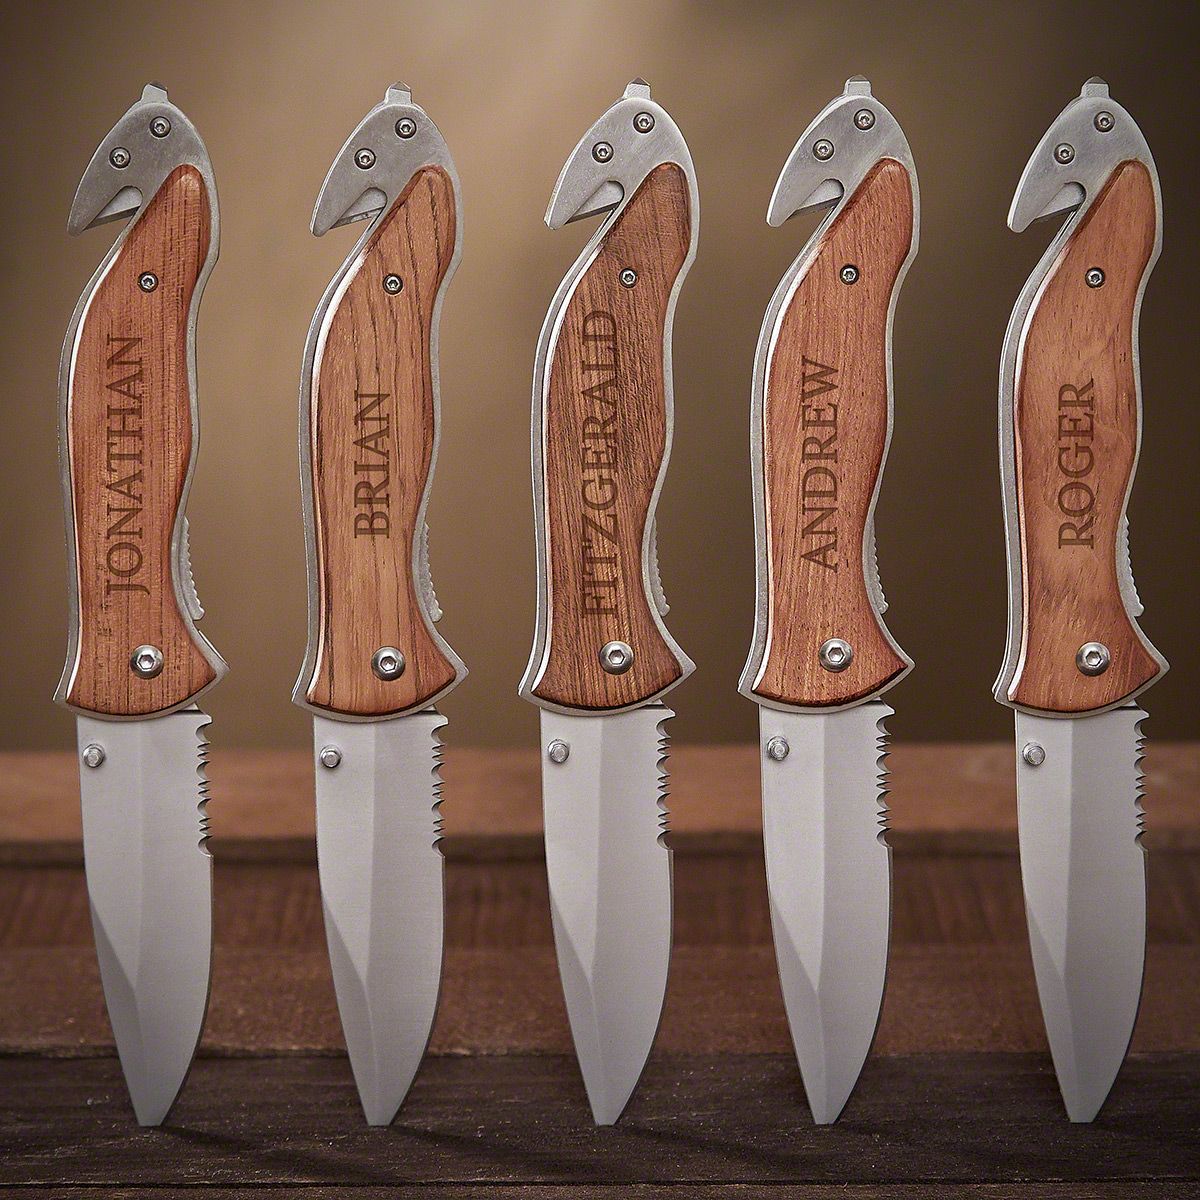 Groomsmen Gift, Set of 7, Wood Handle Pocket Knife Gift Set - Personalized  Knife, Engraved Knife, Hunting Knives - Wedding Party Knives Men